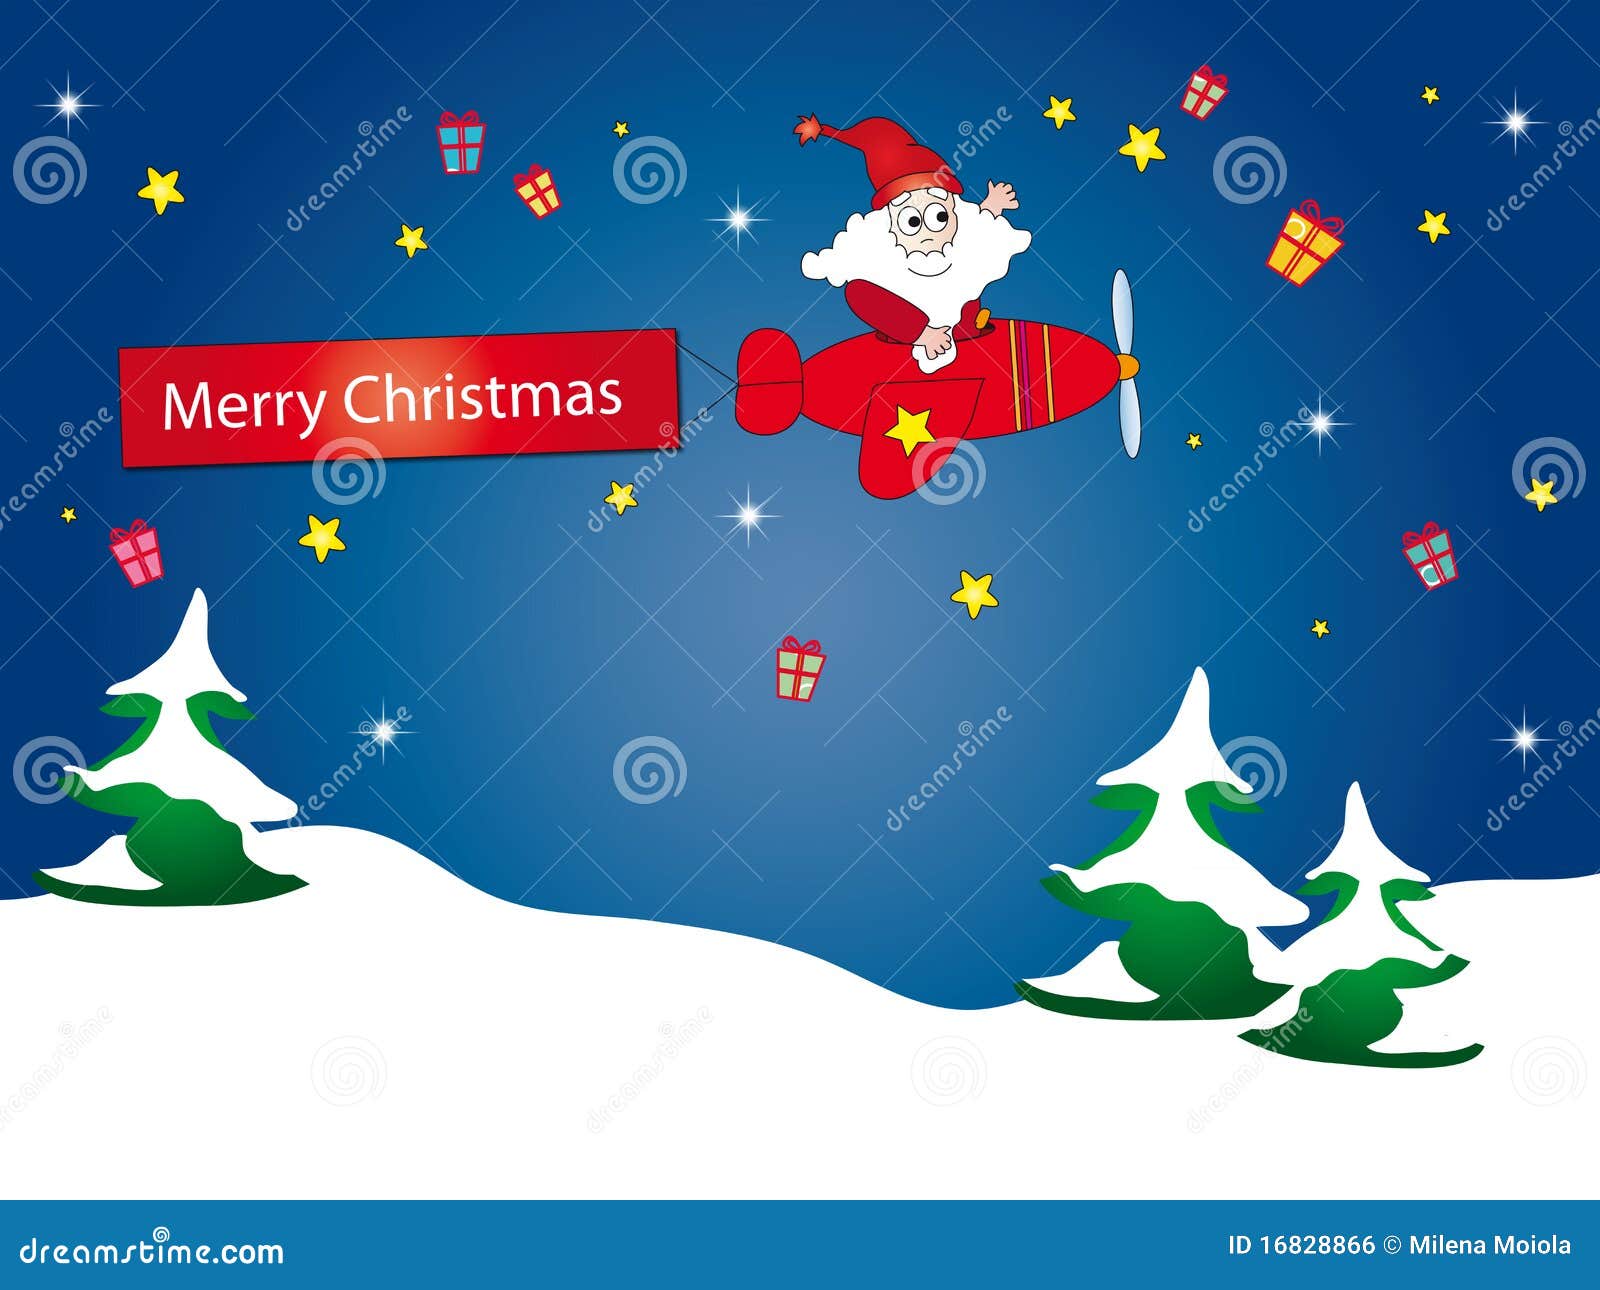 Download Santa Claus Airplane stock illustration Illustration of image